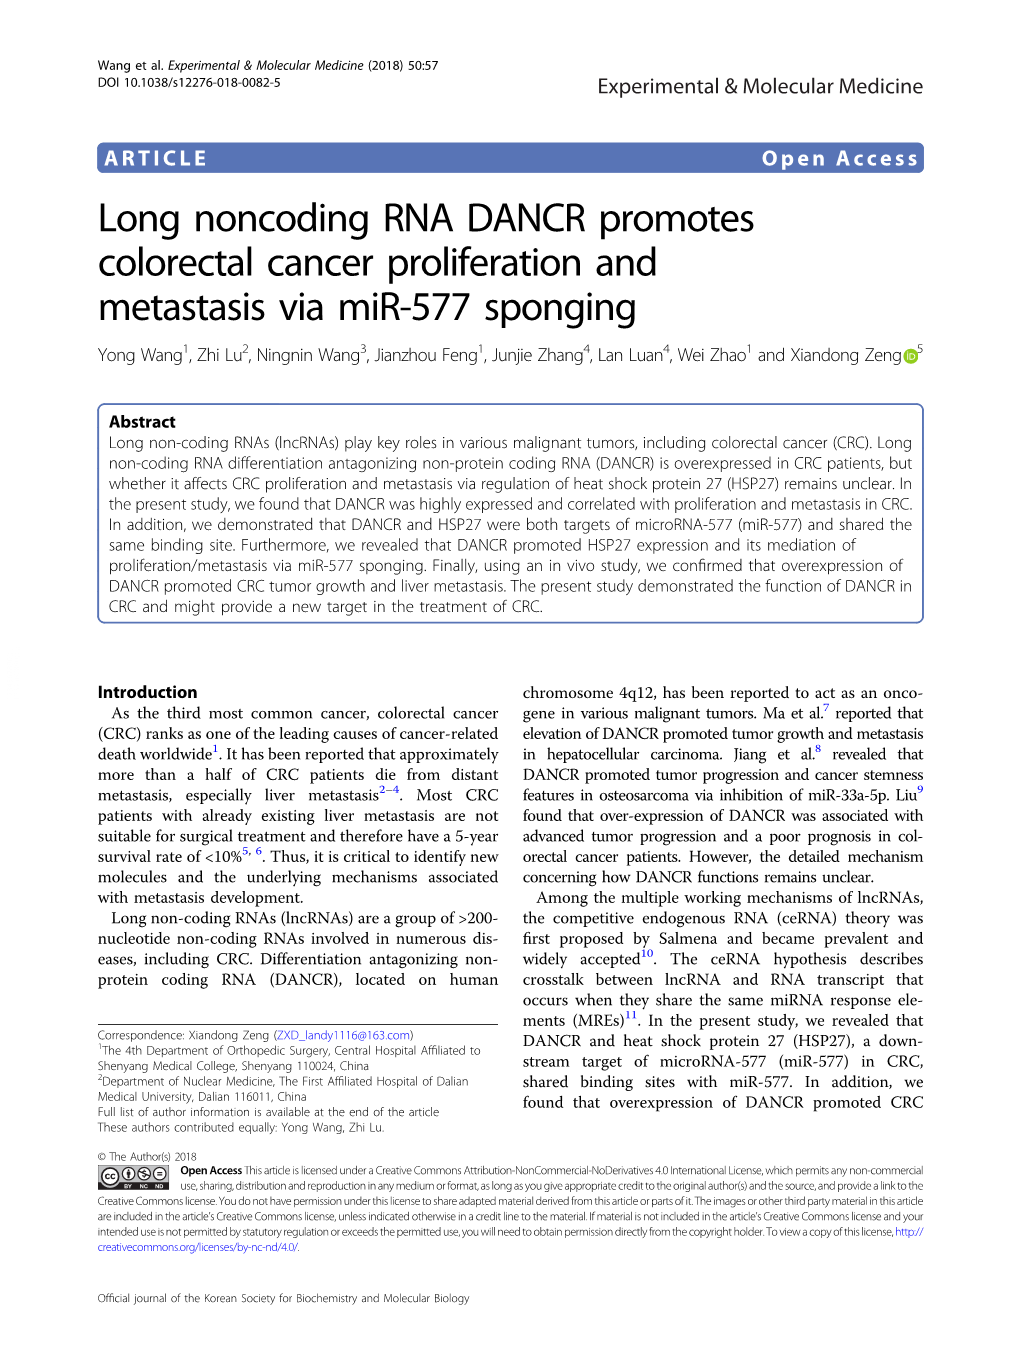 Long Noncoding RNA DANCR Promotes Colorectal Cancer Proliferation and Metastasis Via Mir-577 Sponging